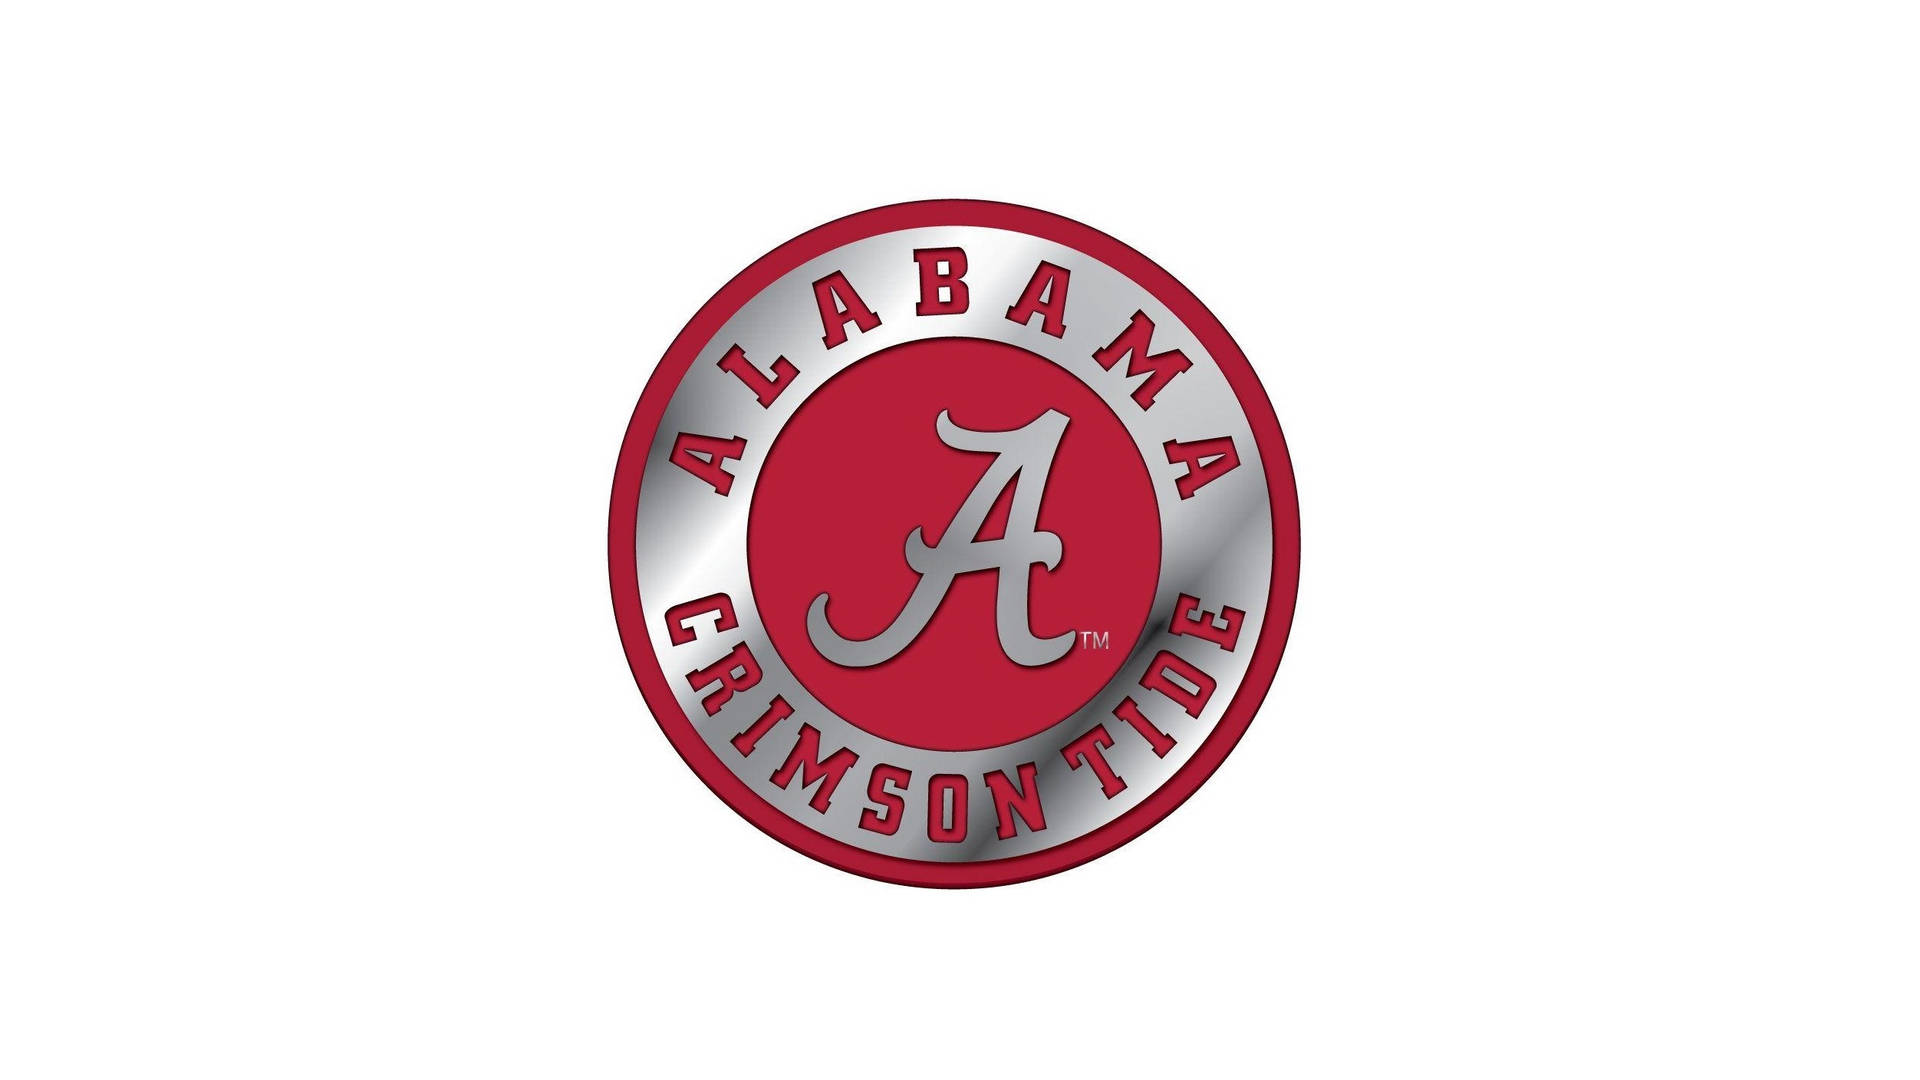 Caption: Exciting Alabama Crimson Tide Football Match Background